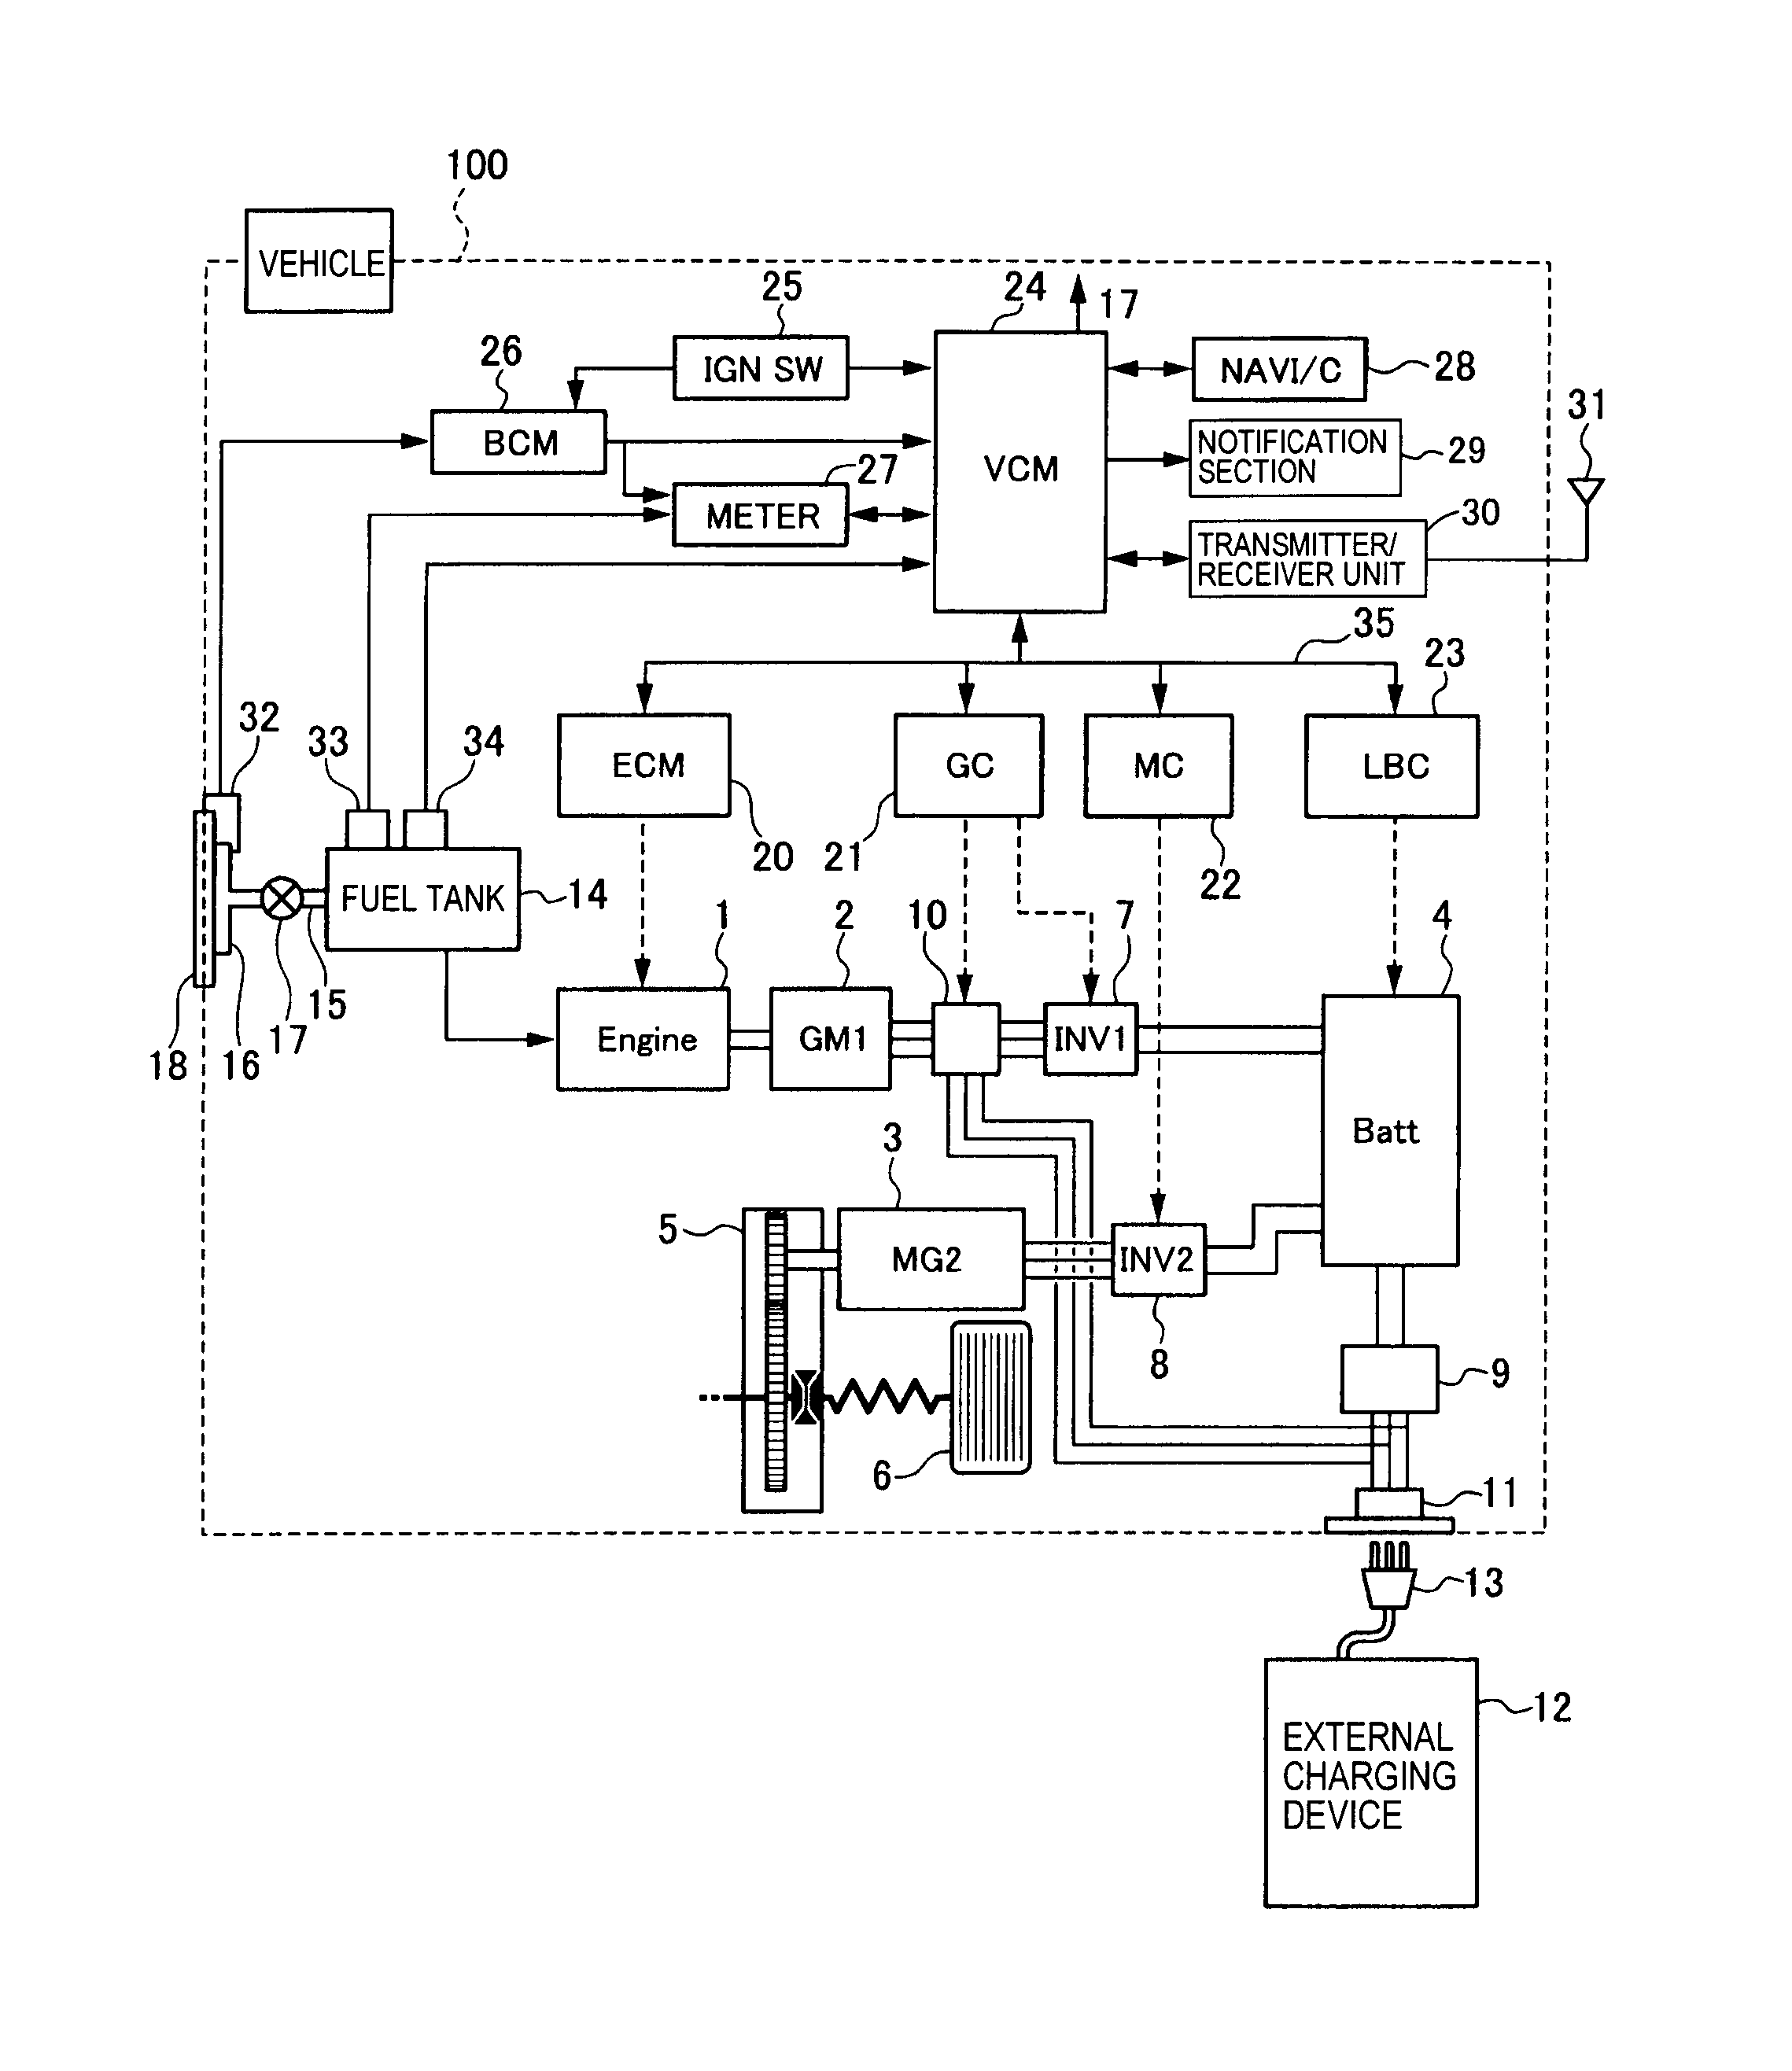 wiring diagram samsung dryer dv42h5400ef/a3